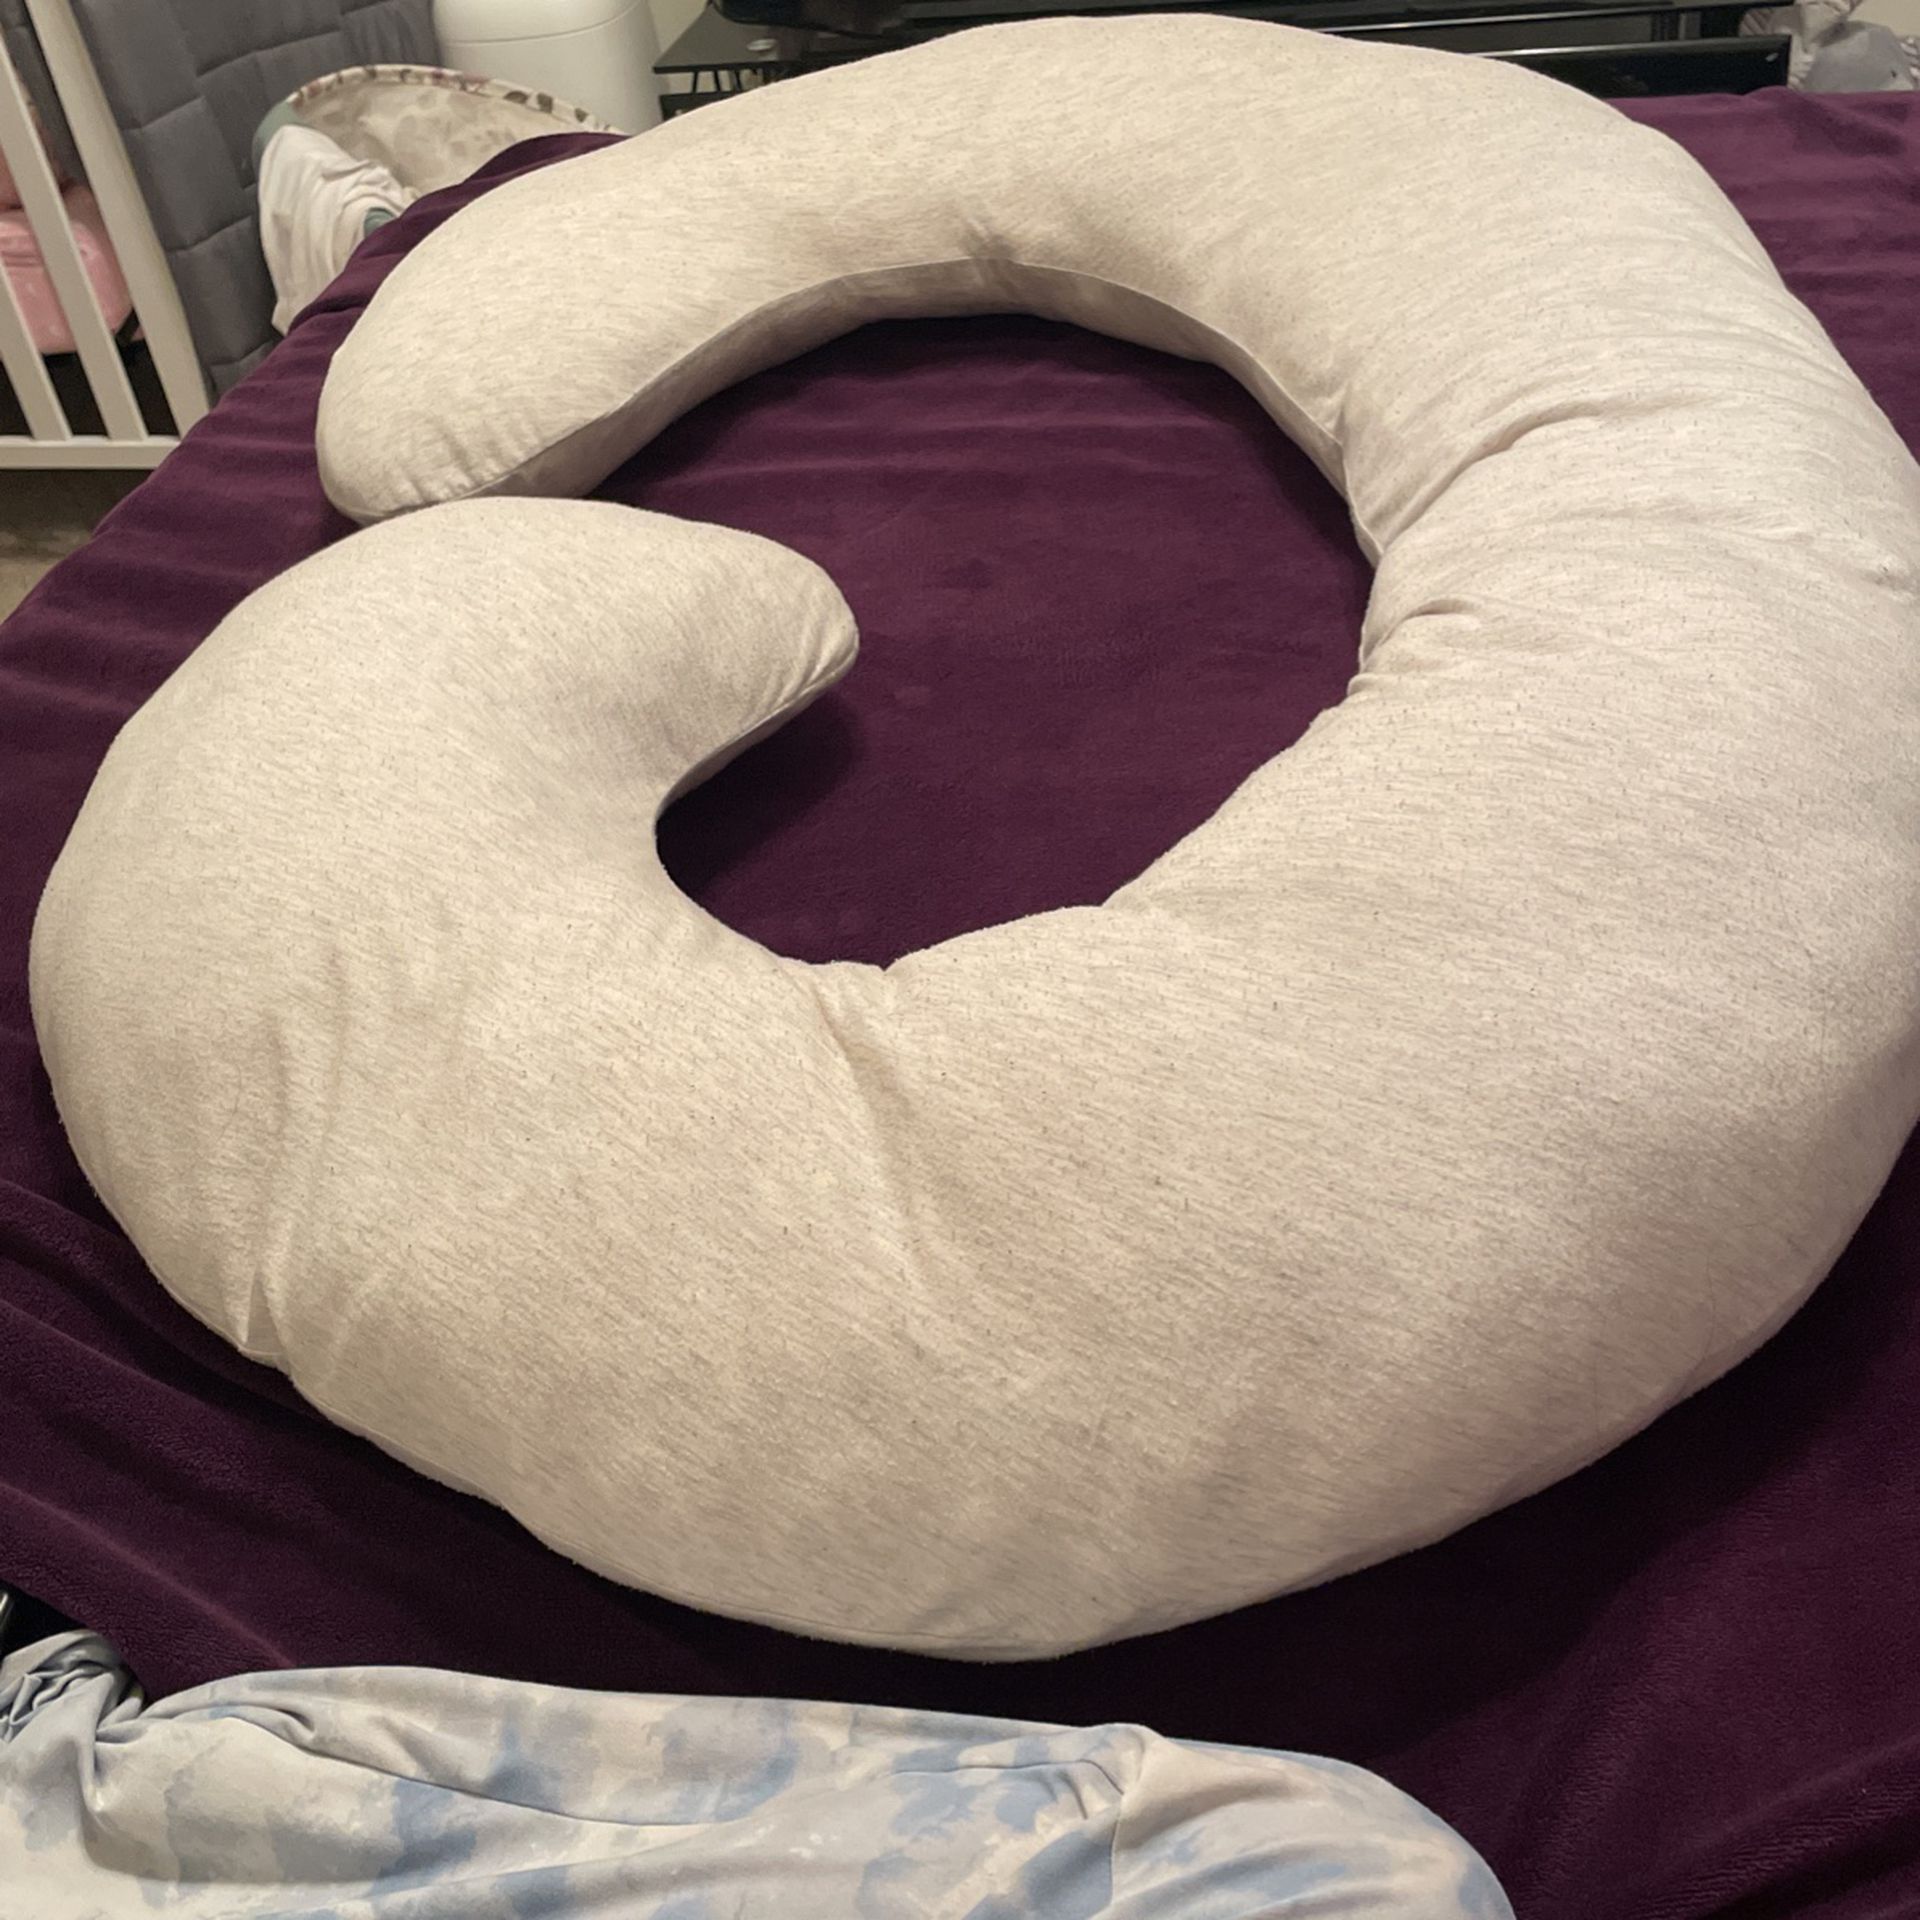 Giant Pregnancy Pillow